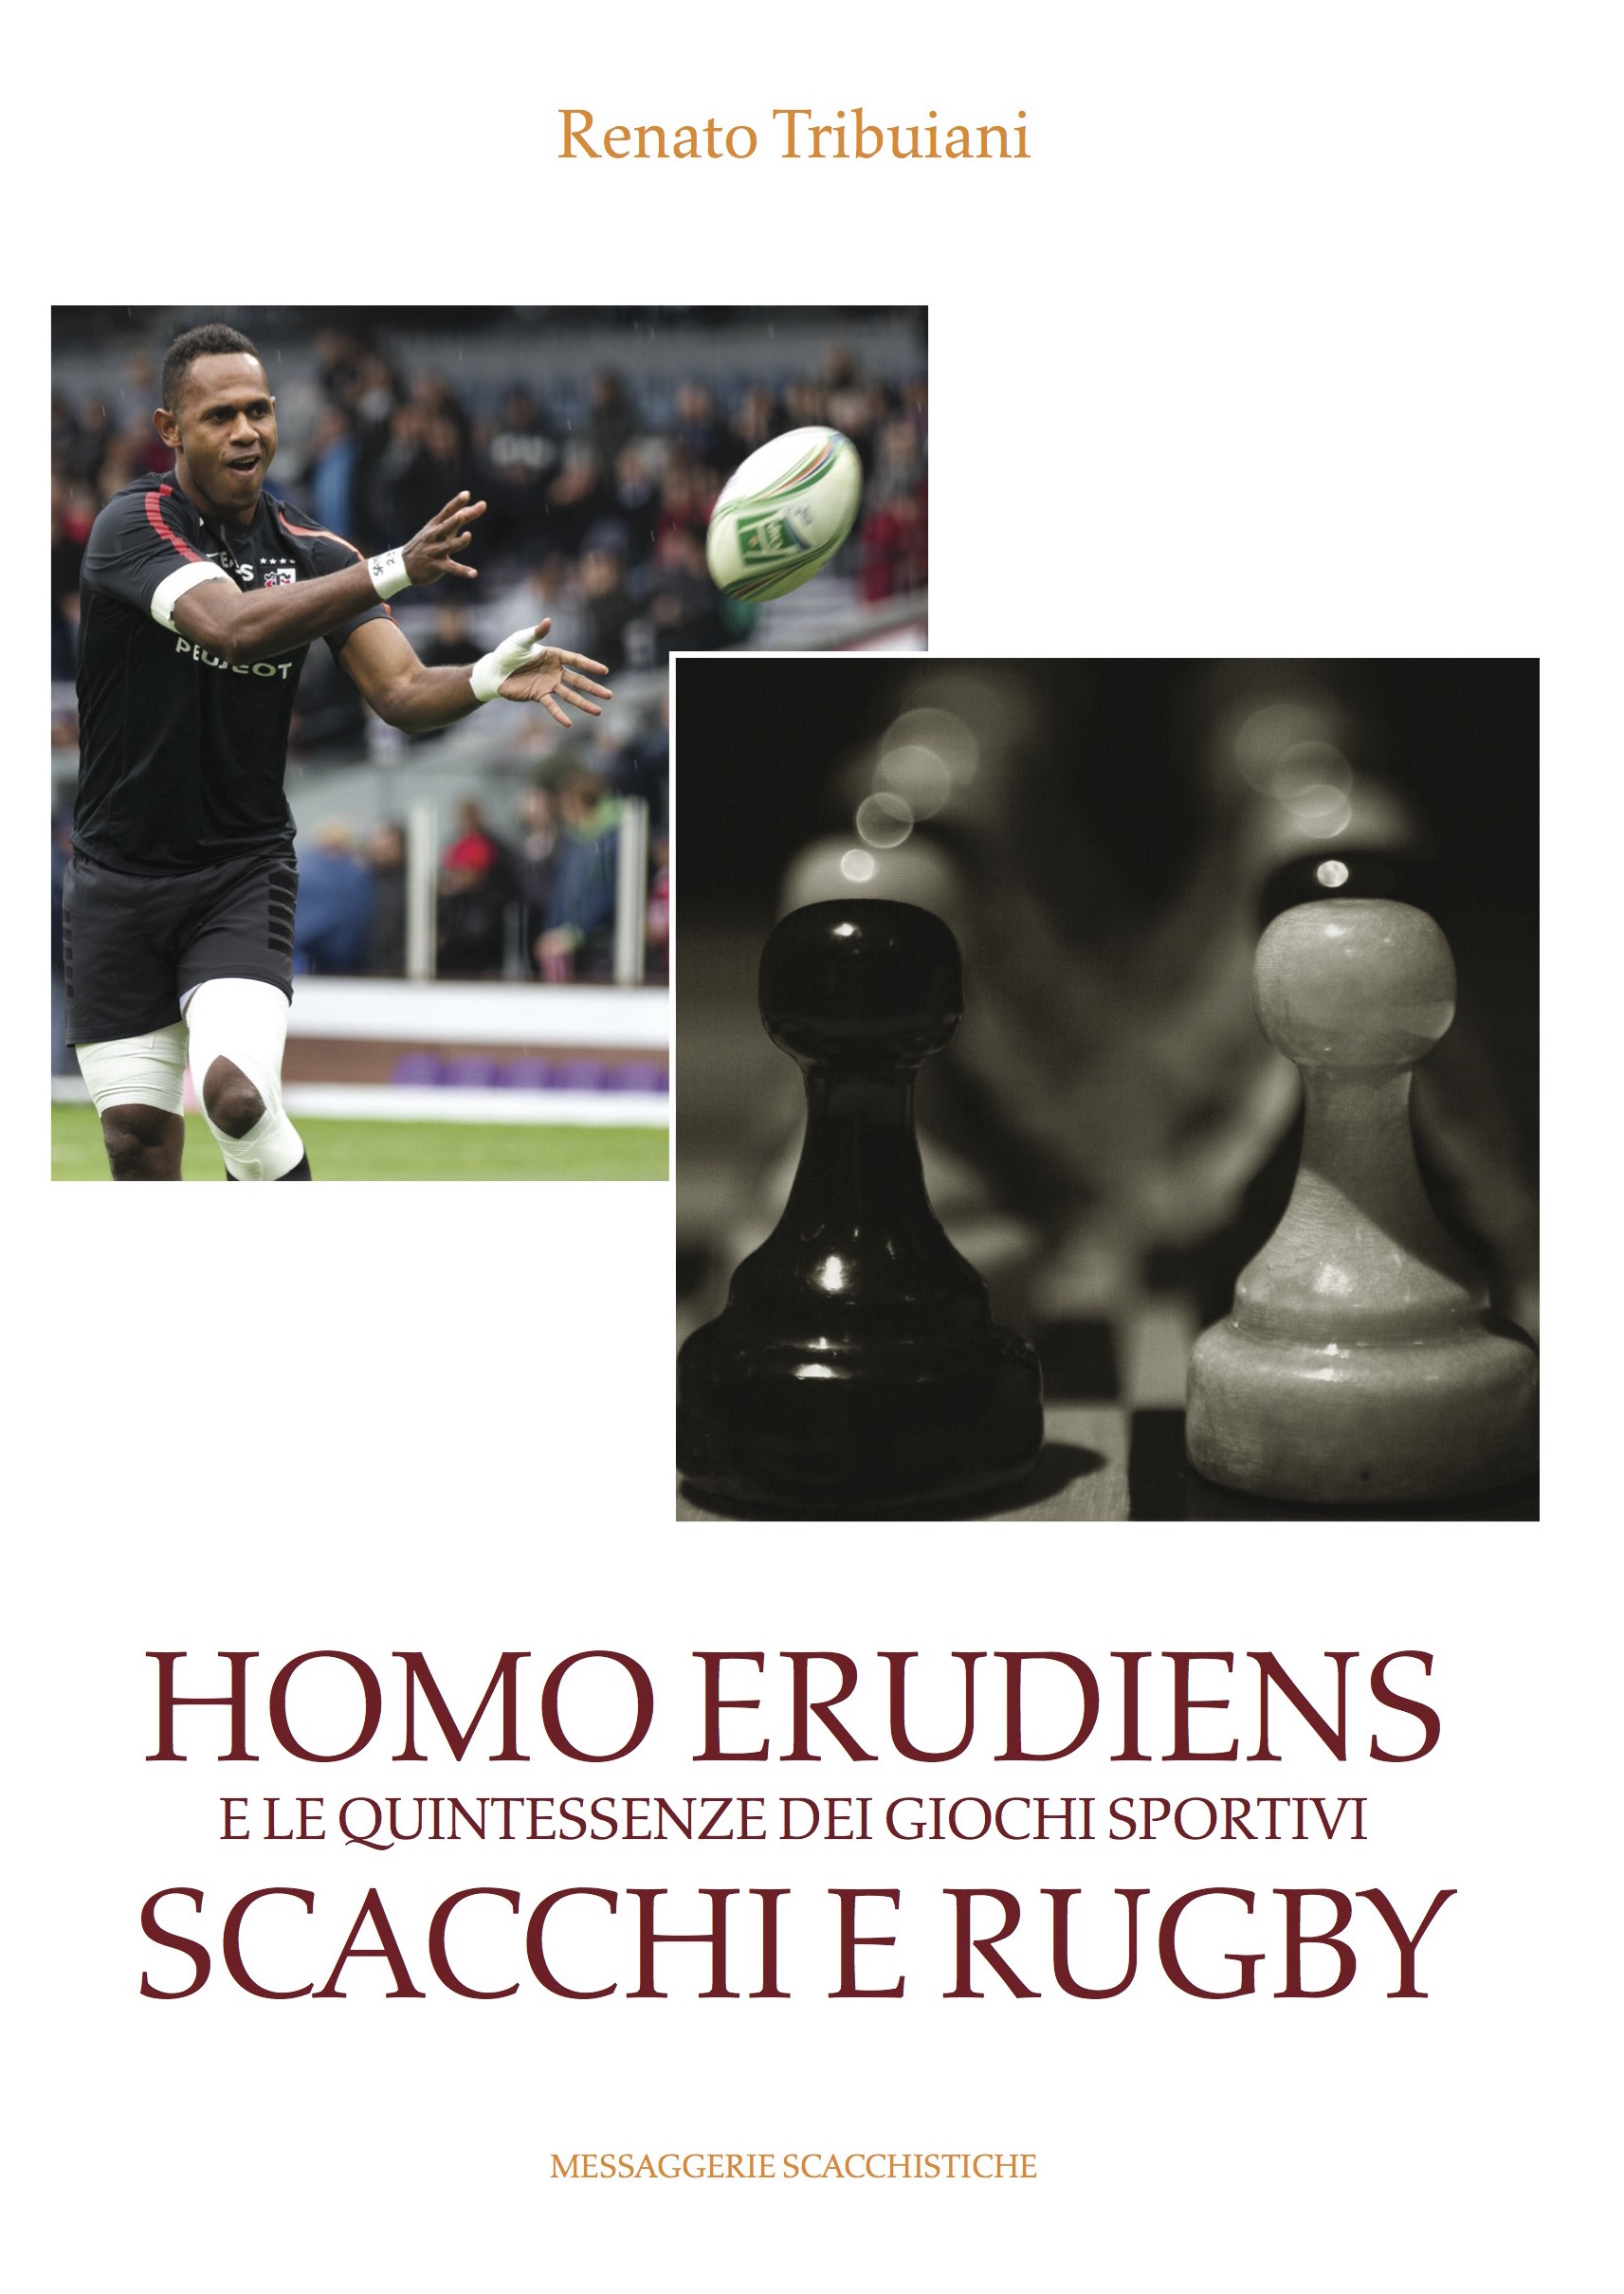 Homo erudiens - scacchi e rugby (solo - ebook PDF)